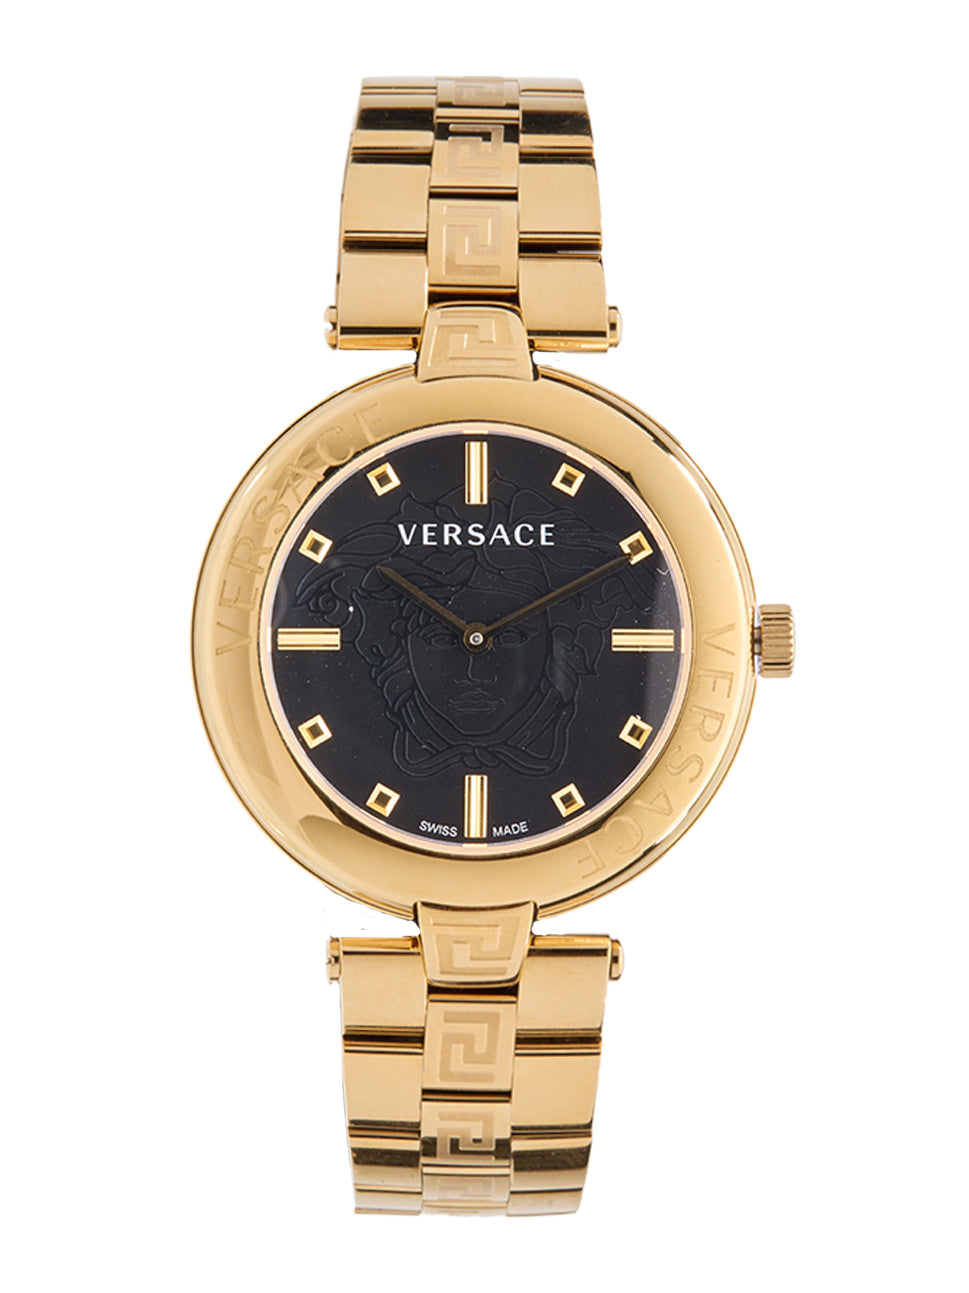 Versace Women's New Lady Quartz Watch Black/Gold 36mm VE2J00721